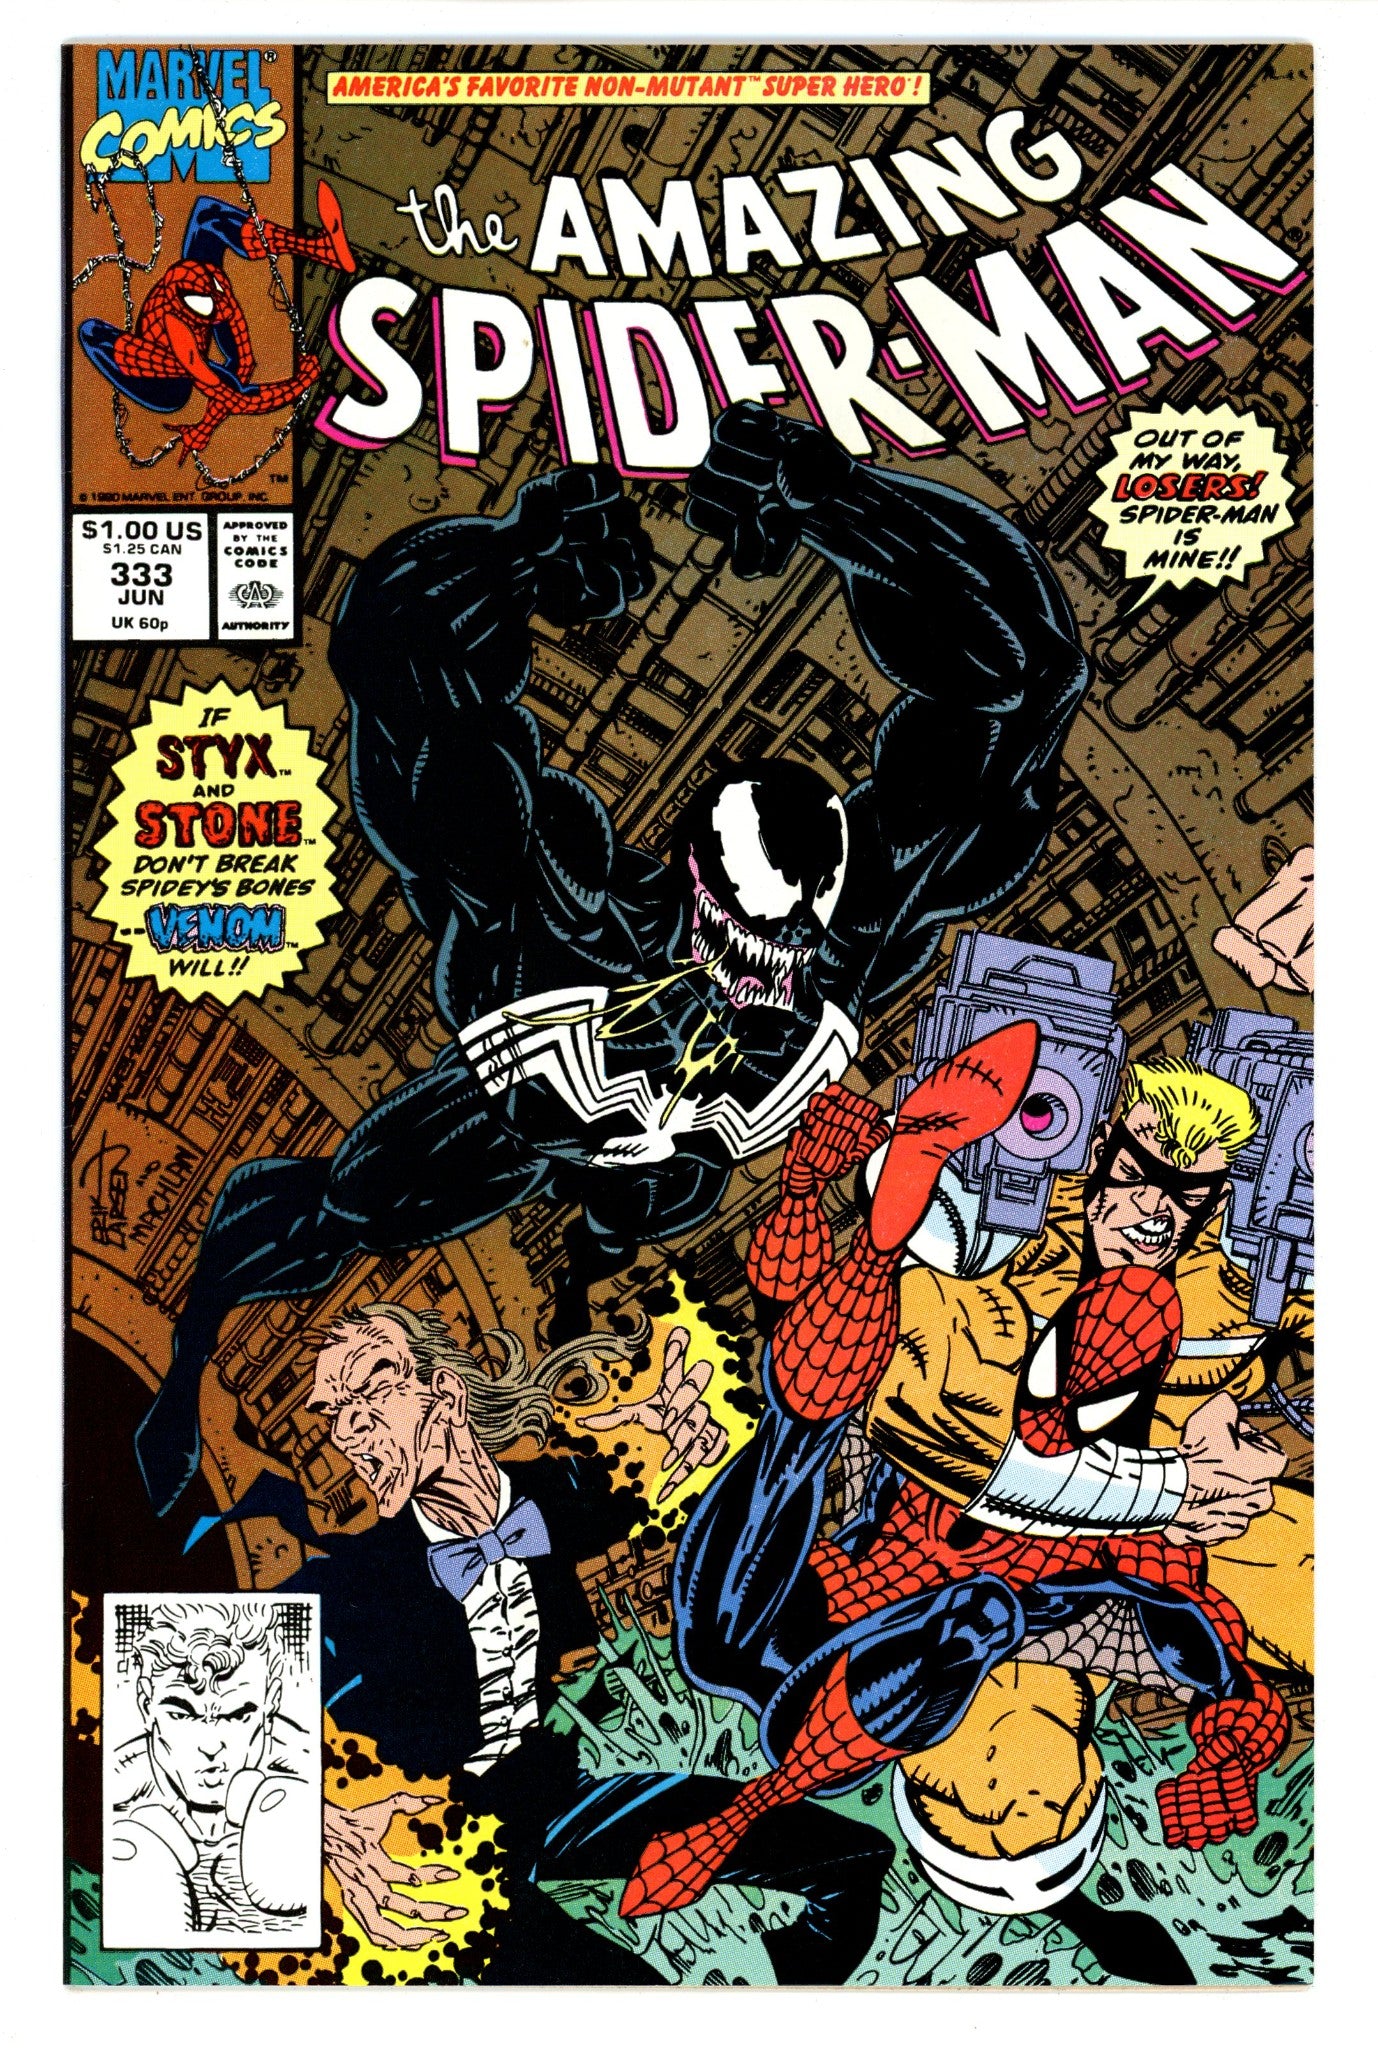 The Amazing Spider-Man Vol 1 333 VF/NM (9.0) (1990) 